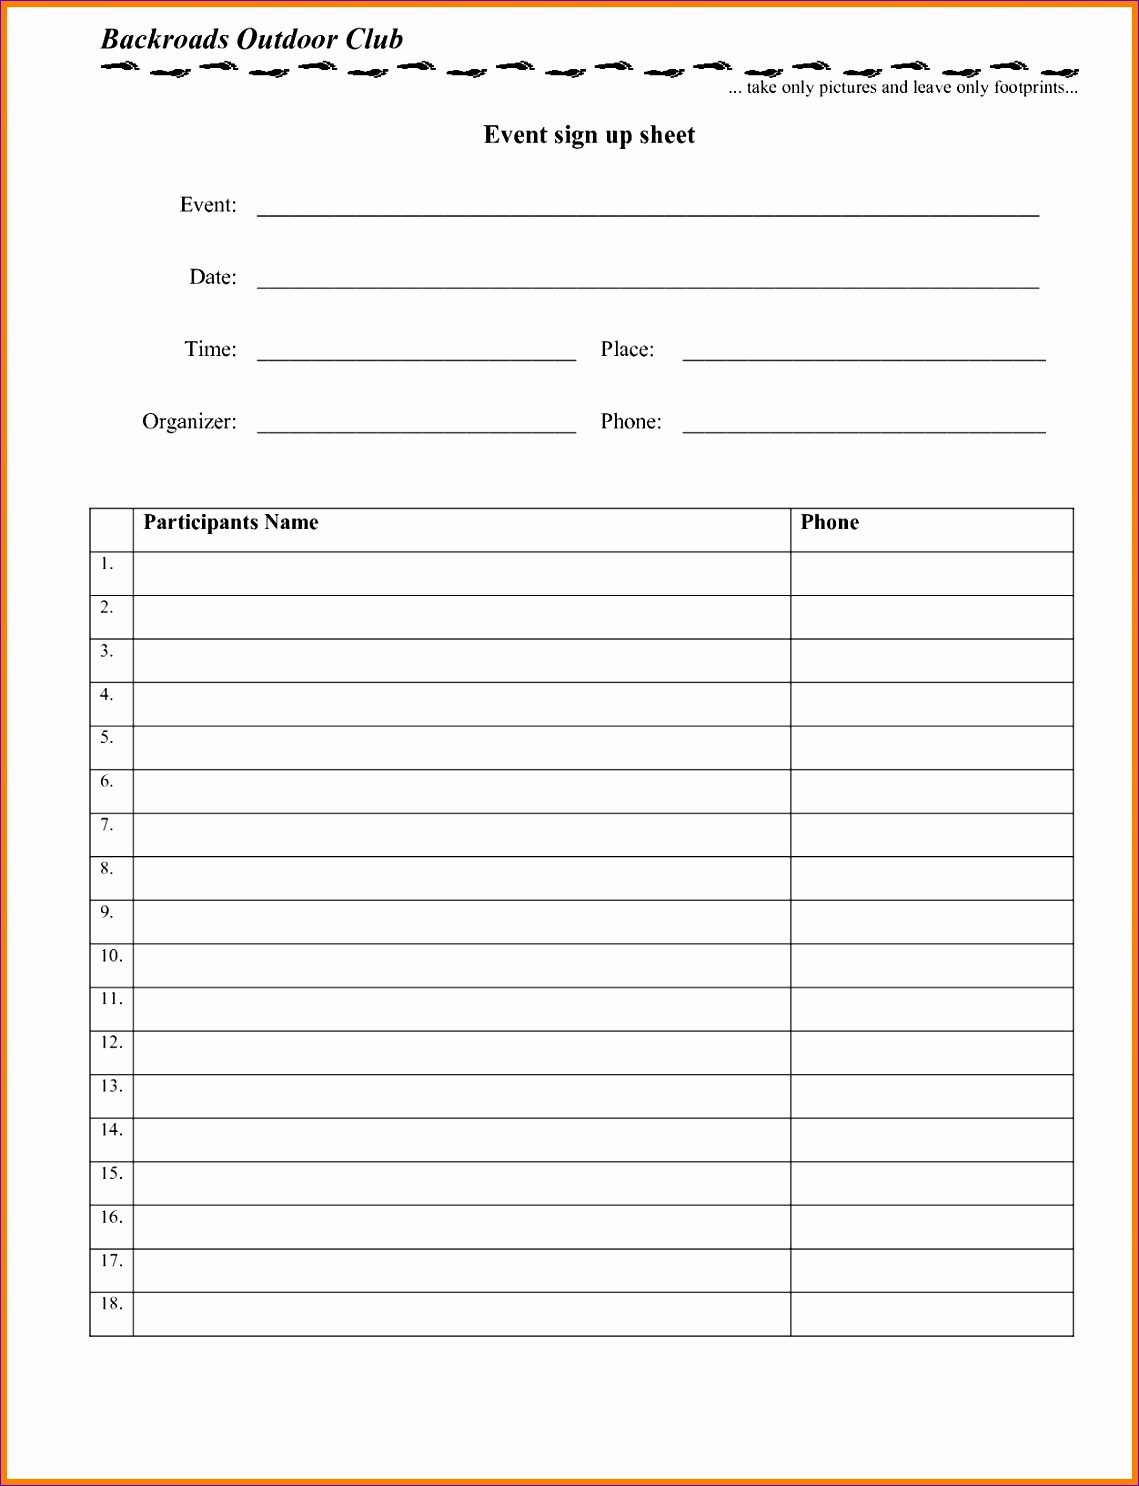 potluck signup sheet template word potluck sign up sheet word event